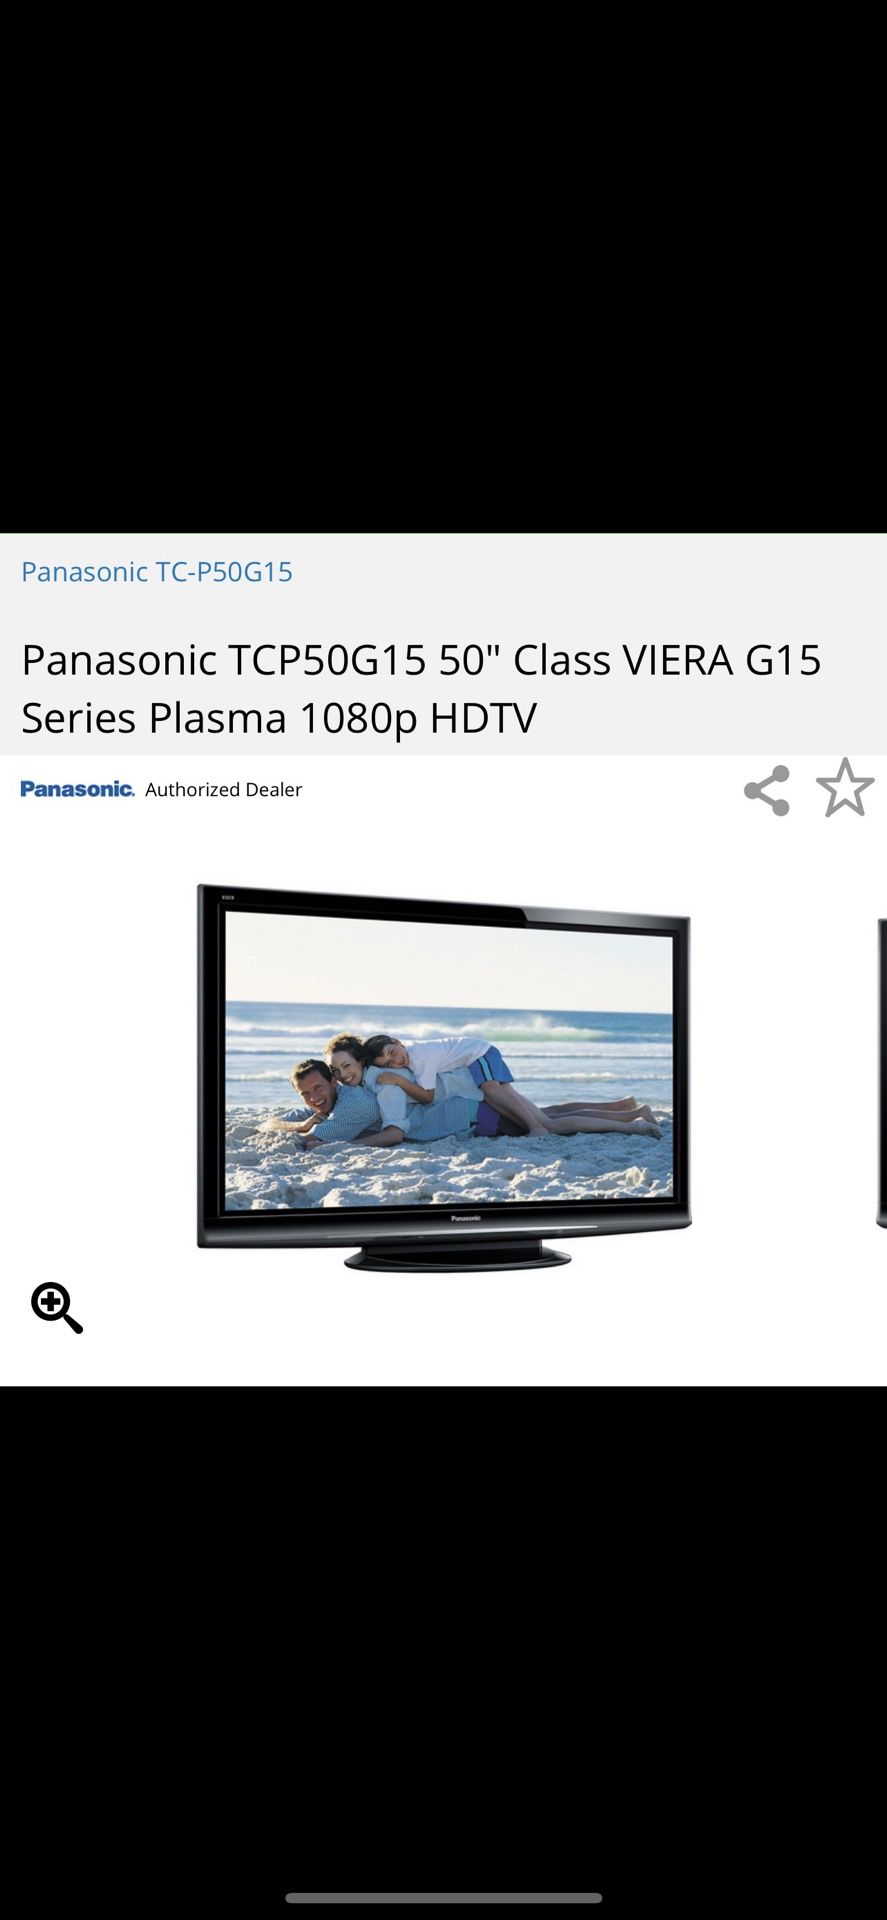 Panasonic TCP50G15 50" FLAT SCREEN TV VIERA G15 Series Plasma 1080p HDTV 1080